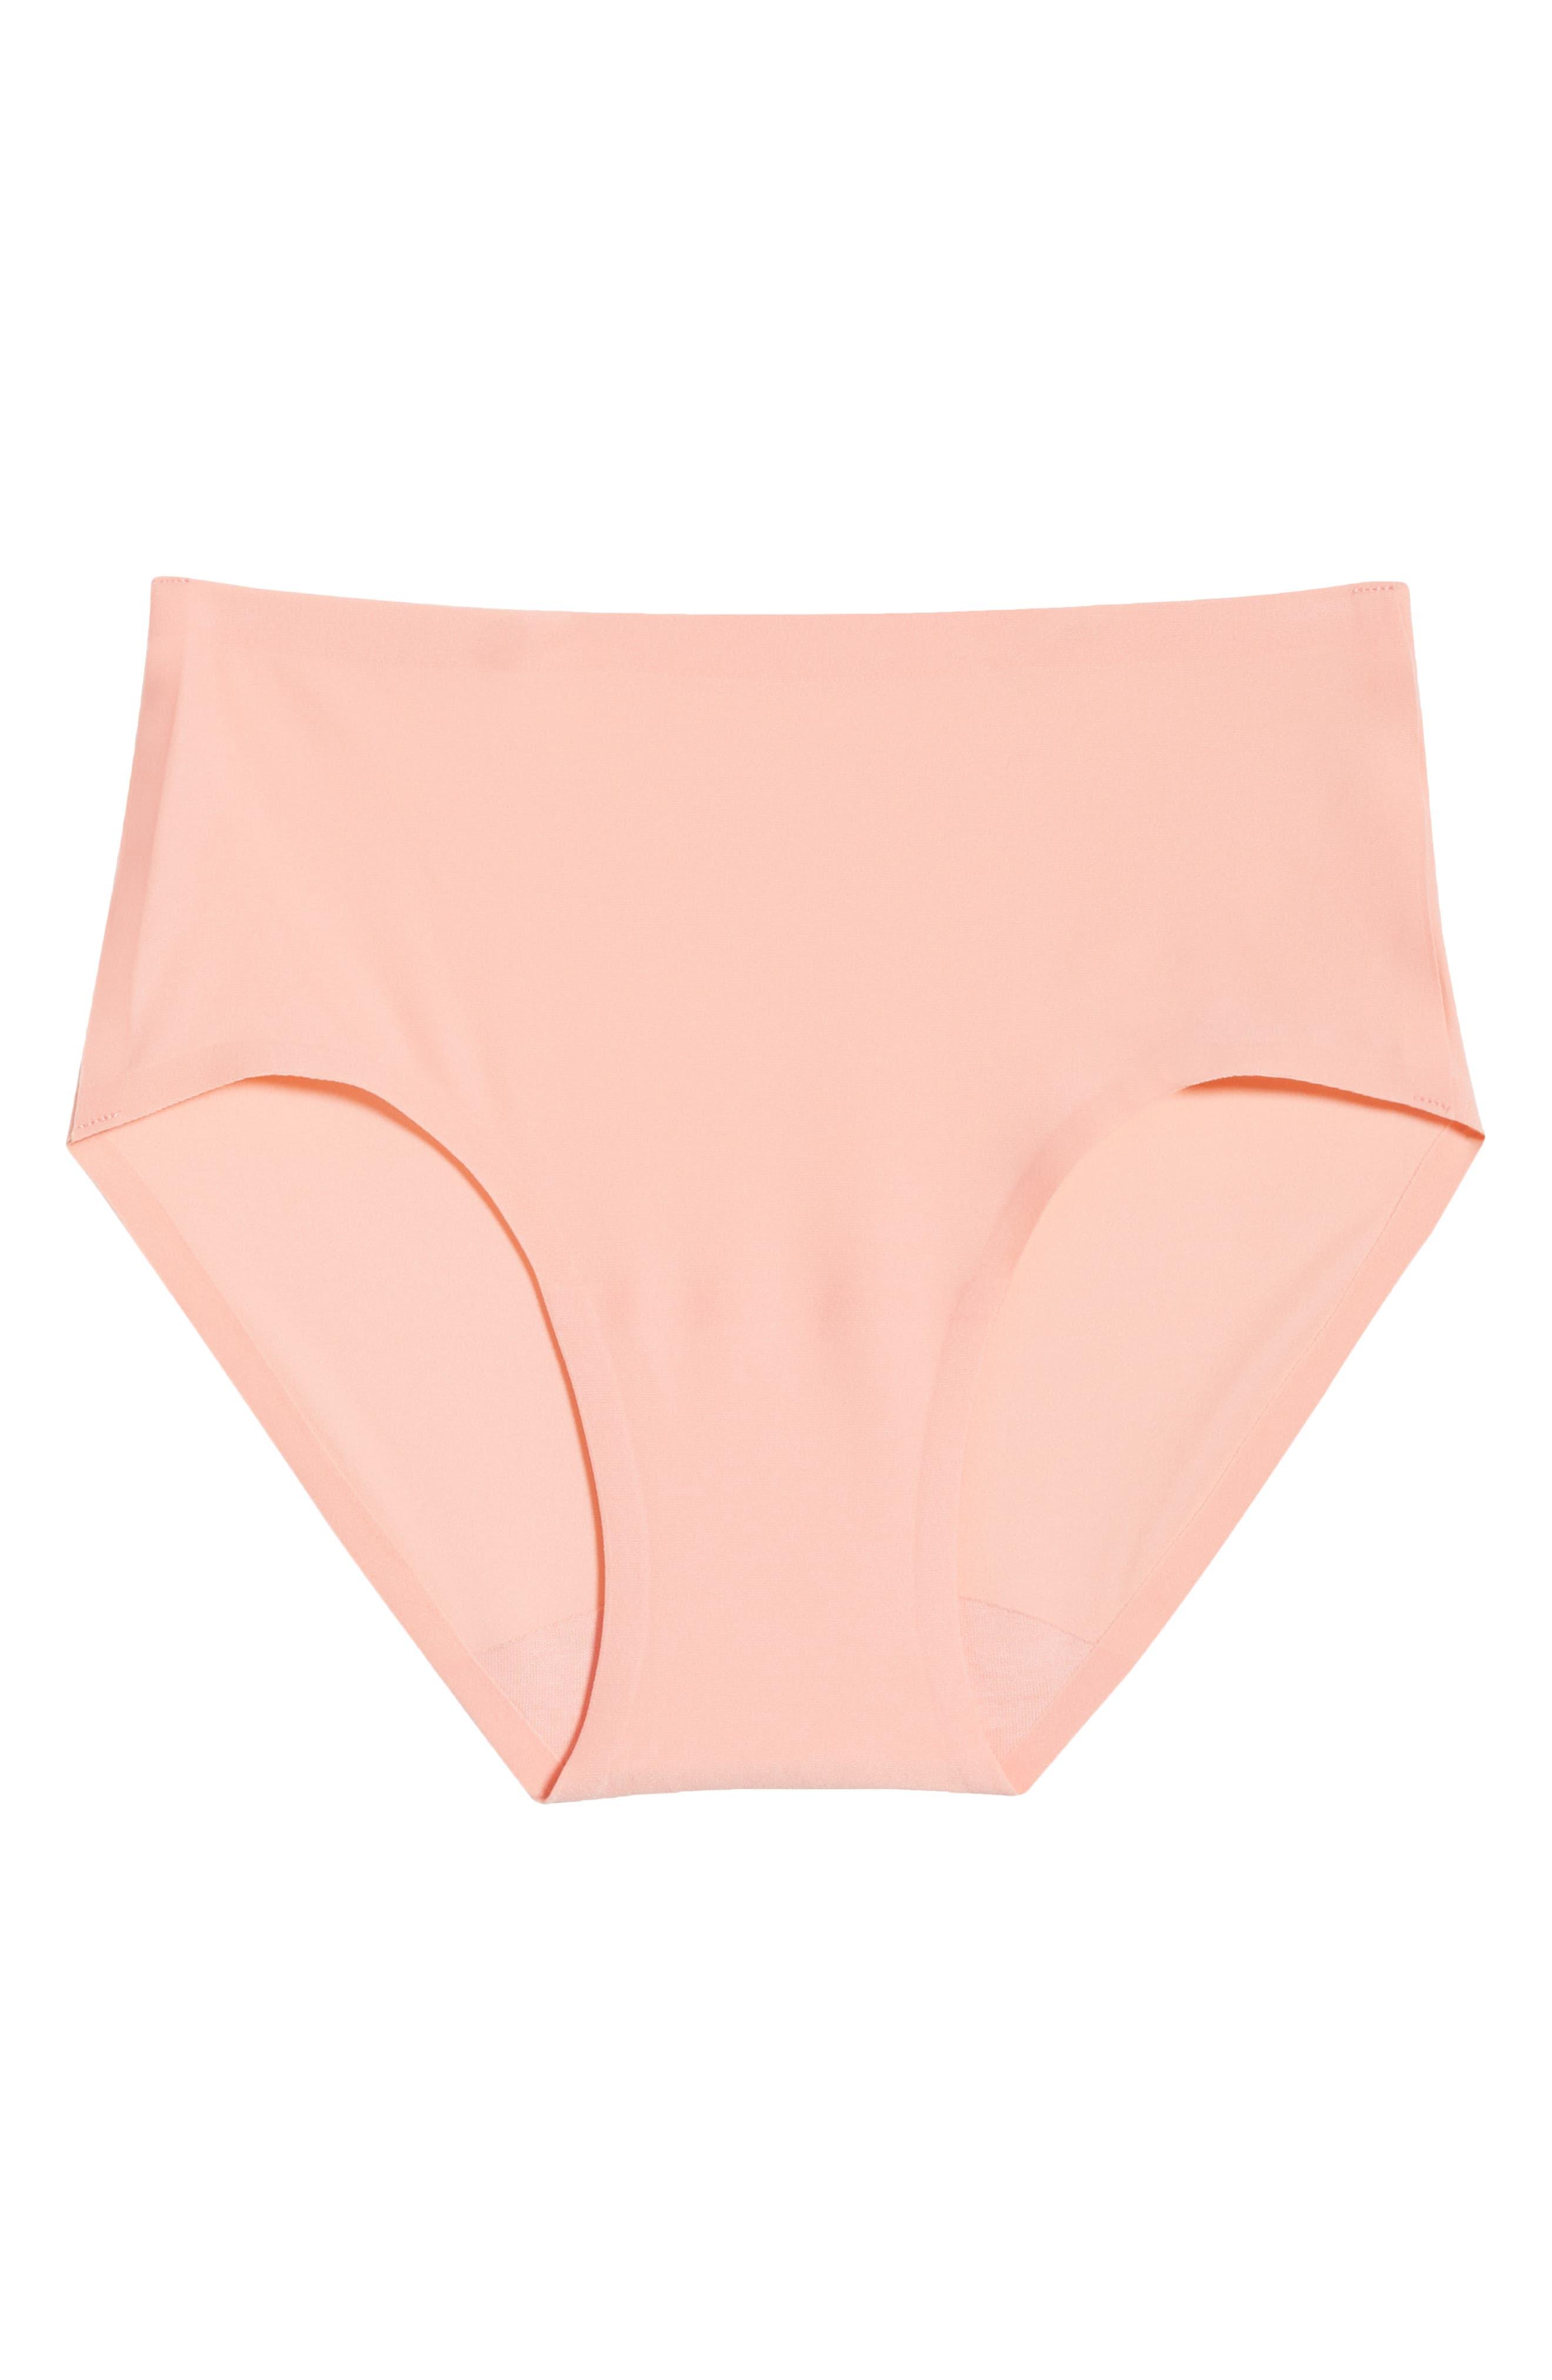 CHANTELLE Soft Stretch seamless bikini panty, Panties for women, Underwear